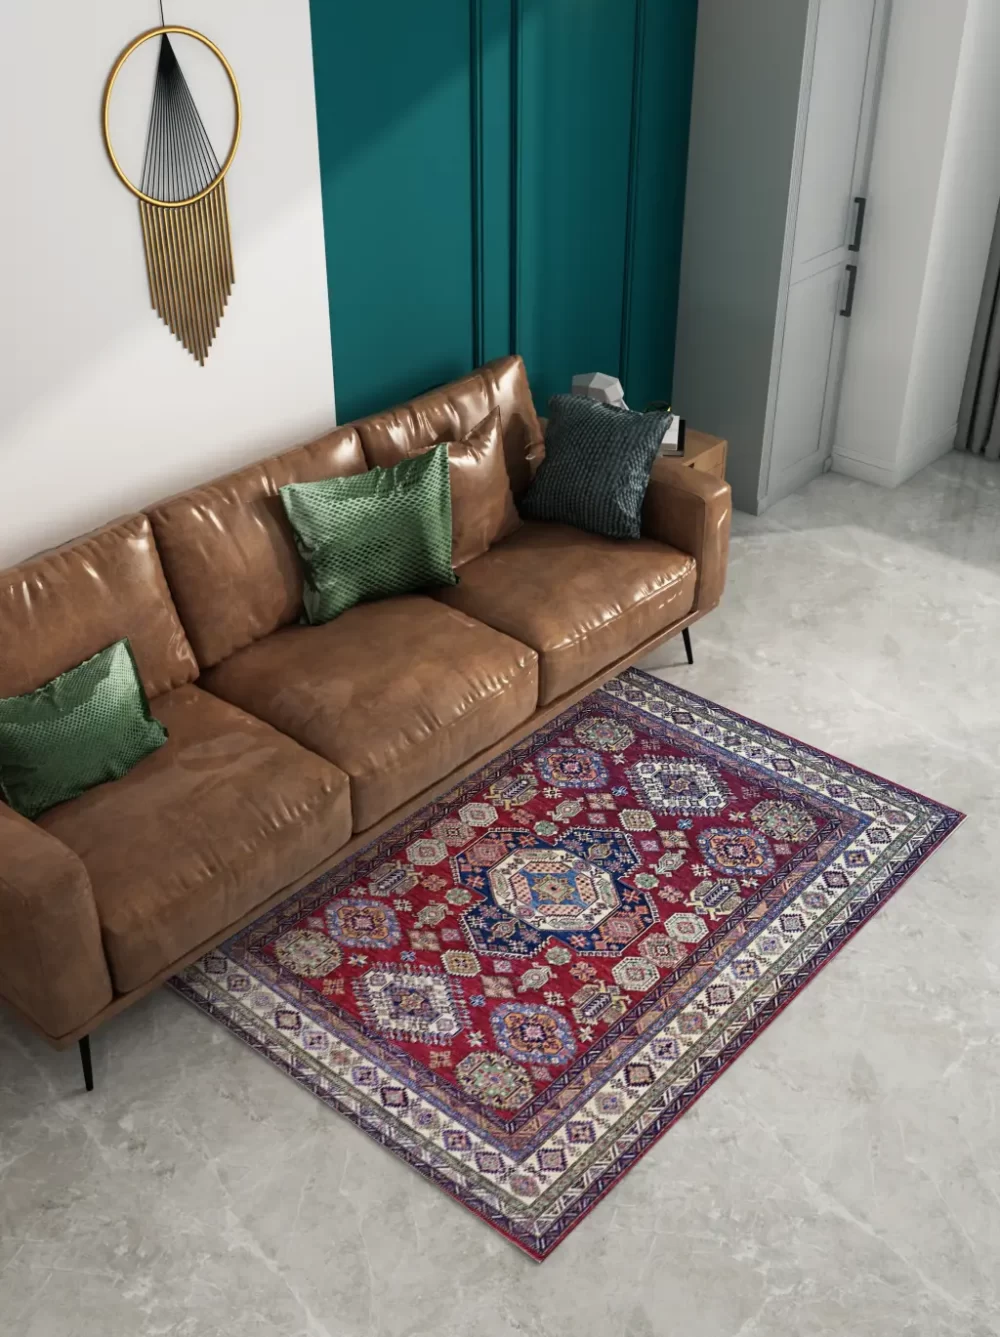 9 x 12 New Kazak Pakistan Wool Classy Area Rug in Living Room - pineville rug gallery - charlotte nc